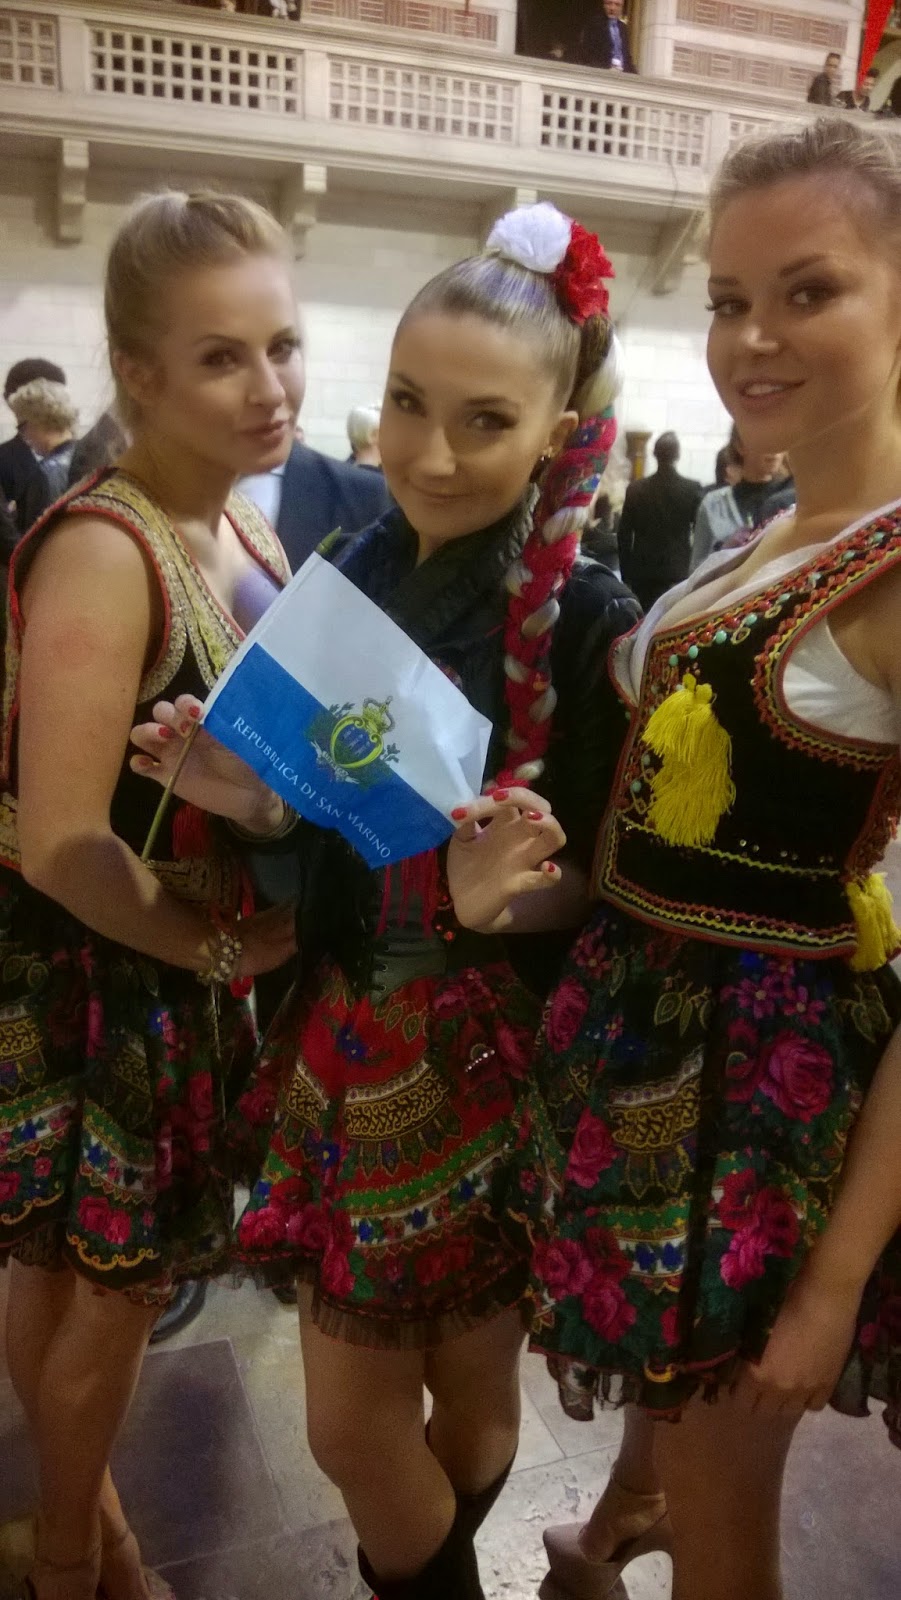 EUROVISION 2014 THE SLAVIC GIRLS SUPPORT SAN MARINO